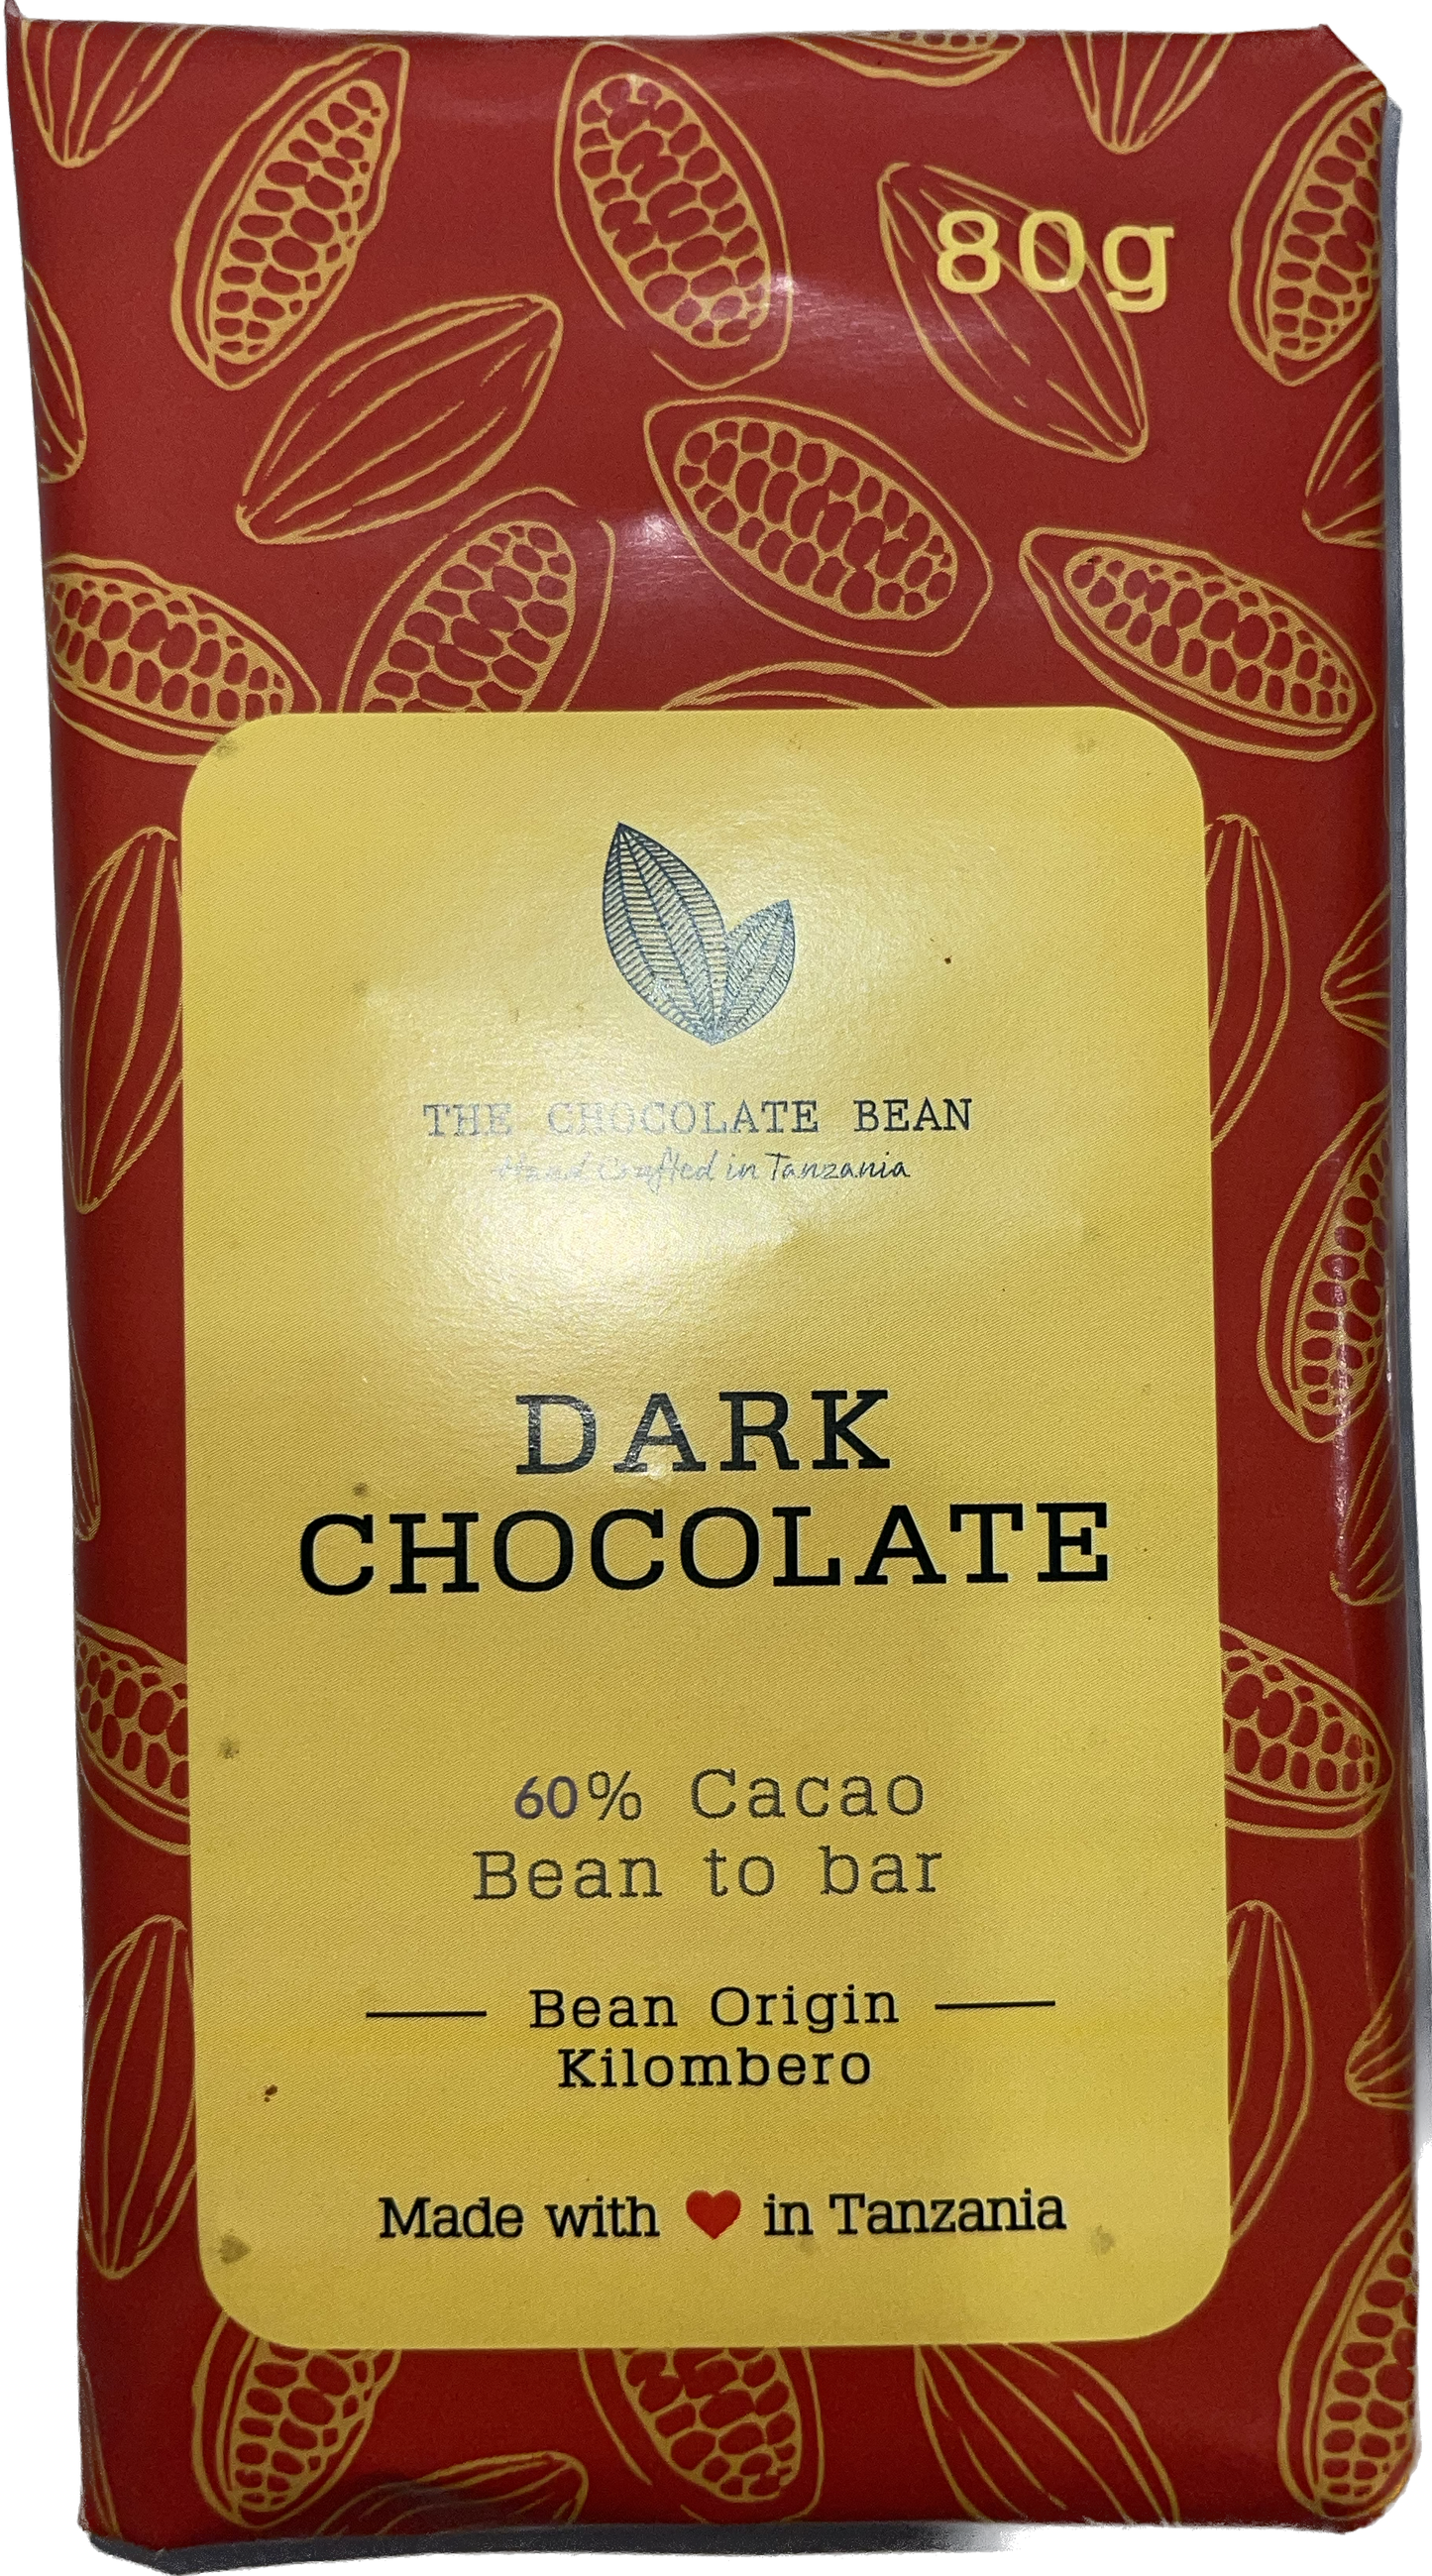 The Chocolate Bean Chocolate Bar